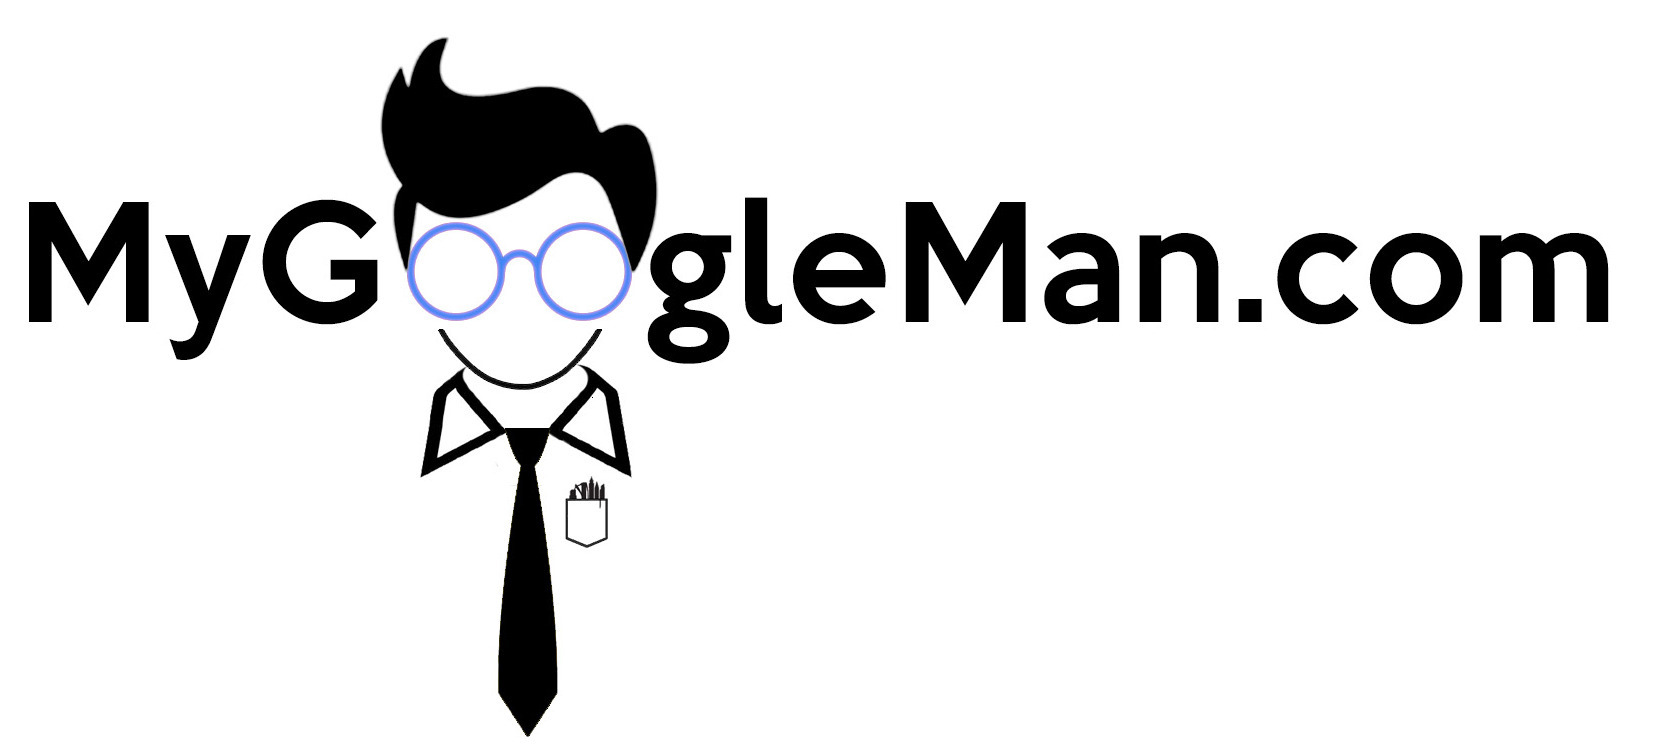 My Google Man Logo